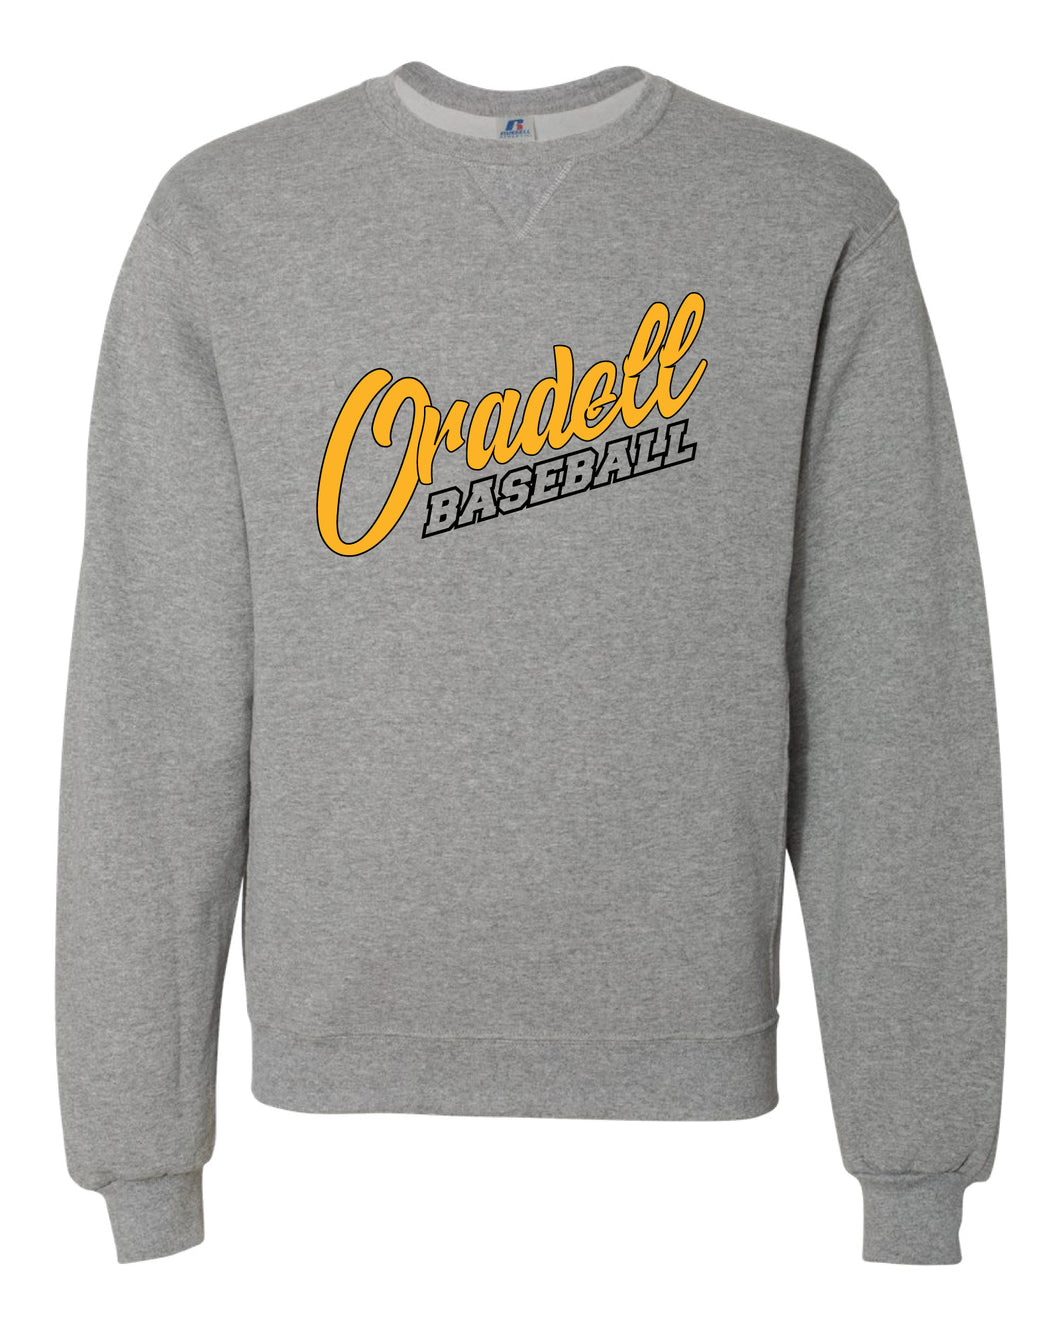 Oradell Baseball Russell Athletic Cotton Crewneck Sweatshirt - Gray